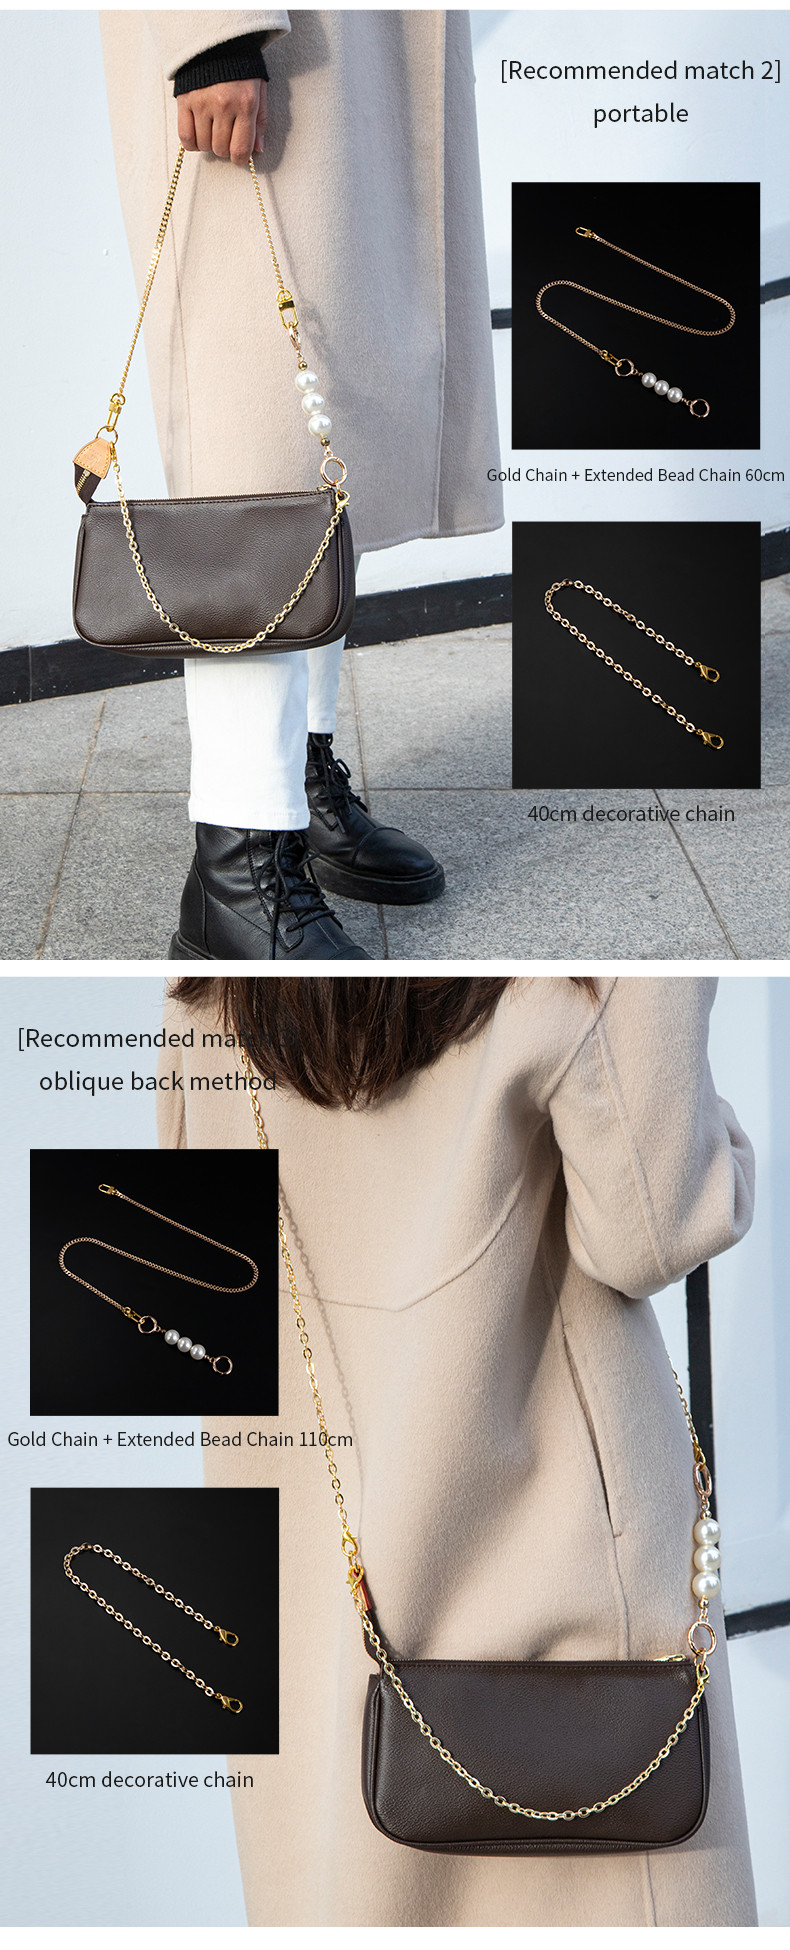 WUTA Shoulder Bag Straps Pearl Chains Fashion Decorative Chains